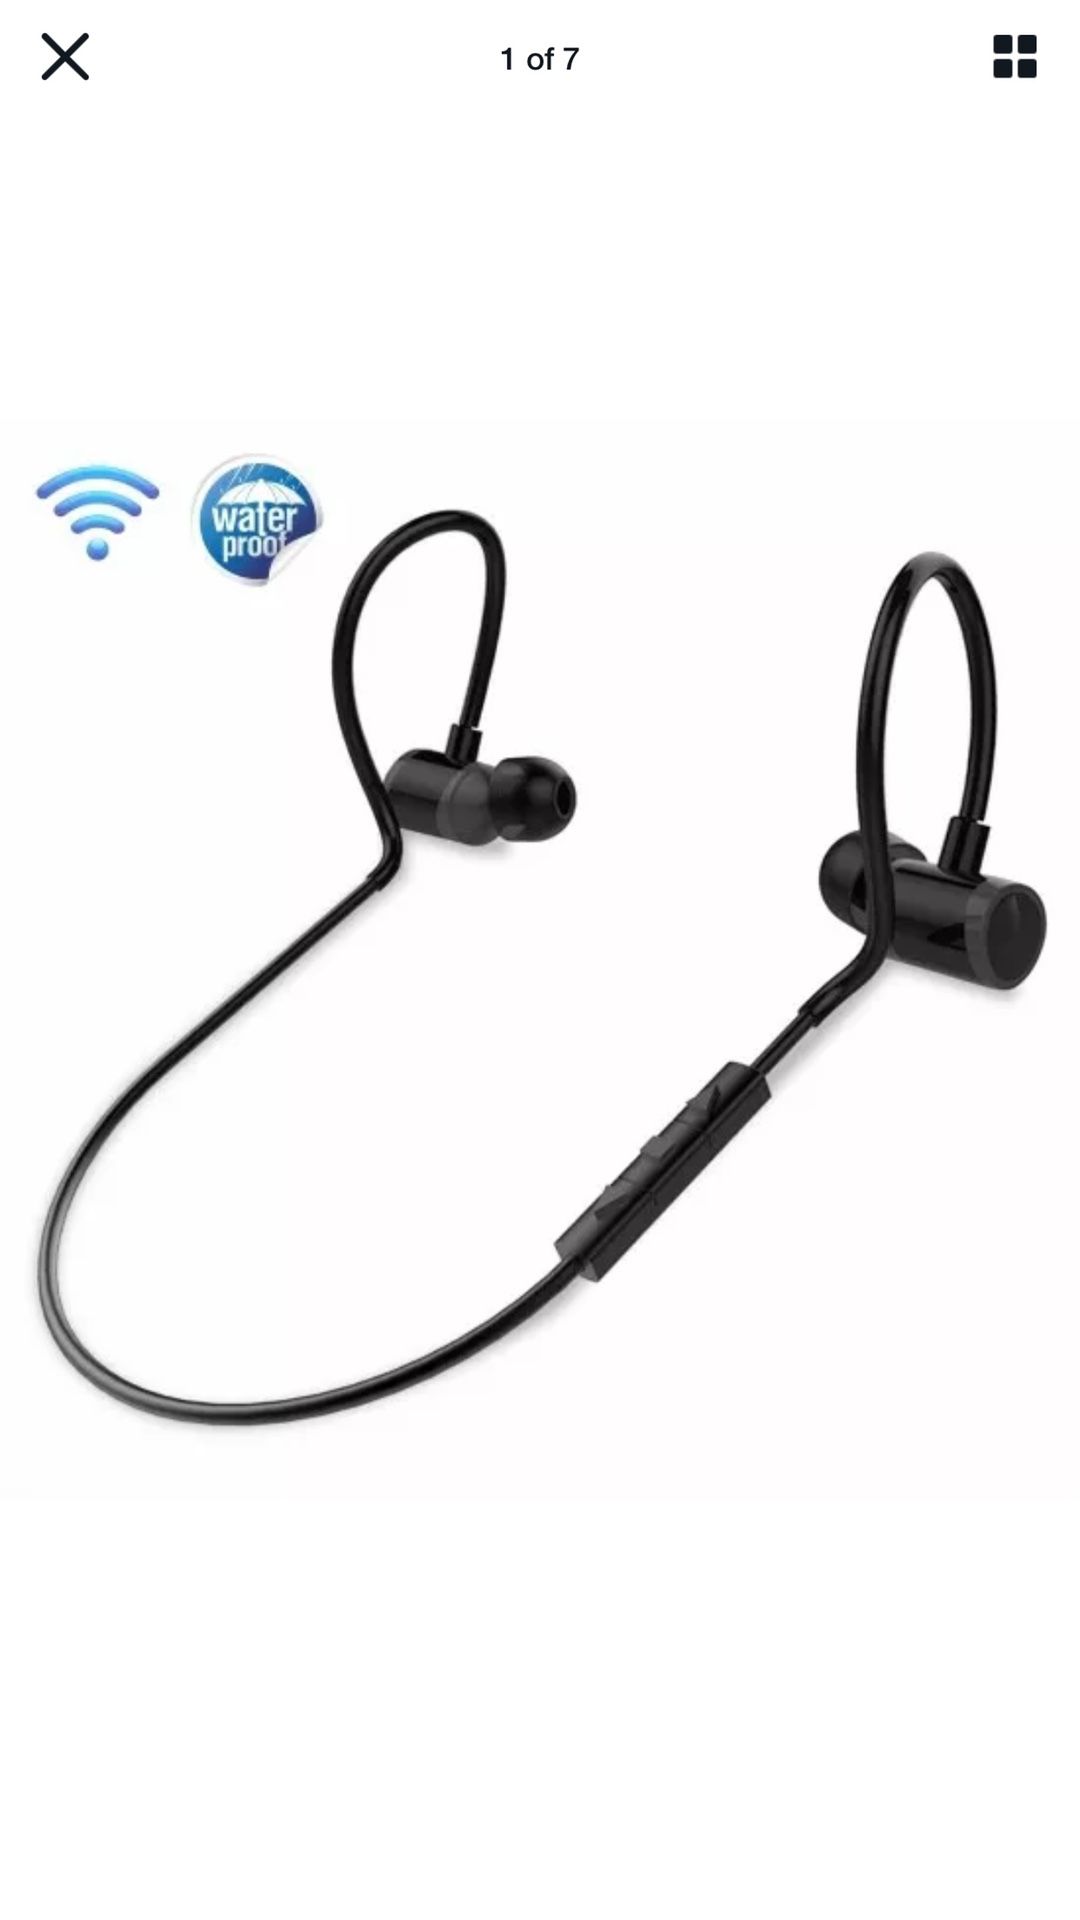 Pyle Waterproof Sports Wireless Bluetooth Headphones w/ Built-In Microphone